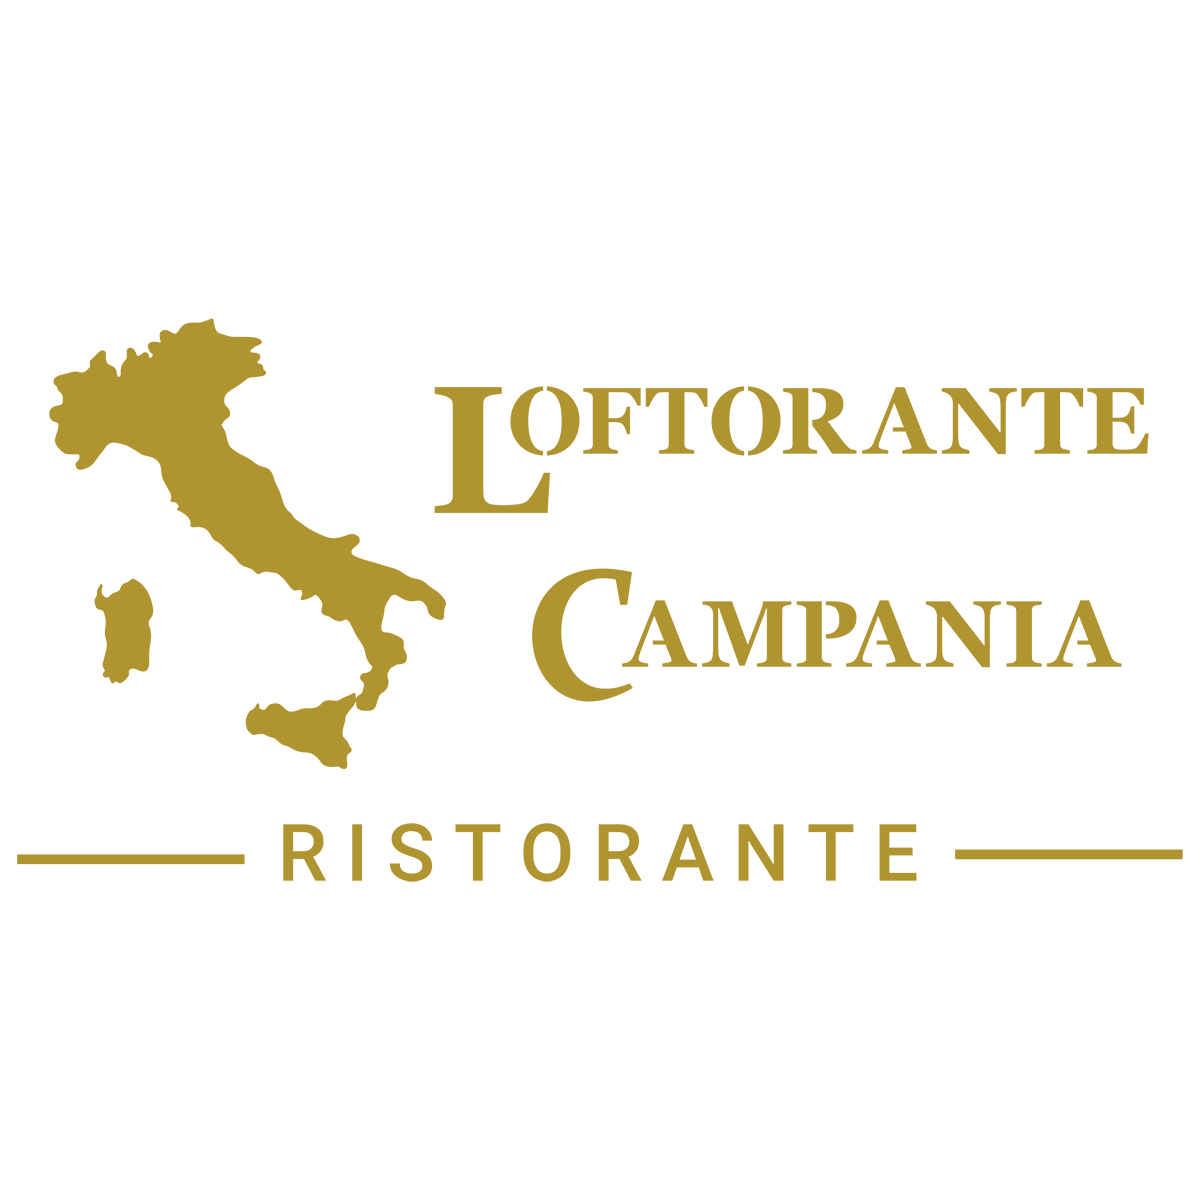 Ristorante Loftorante Campania Logo